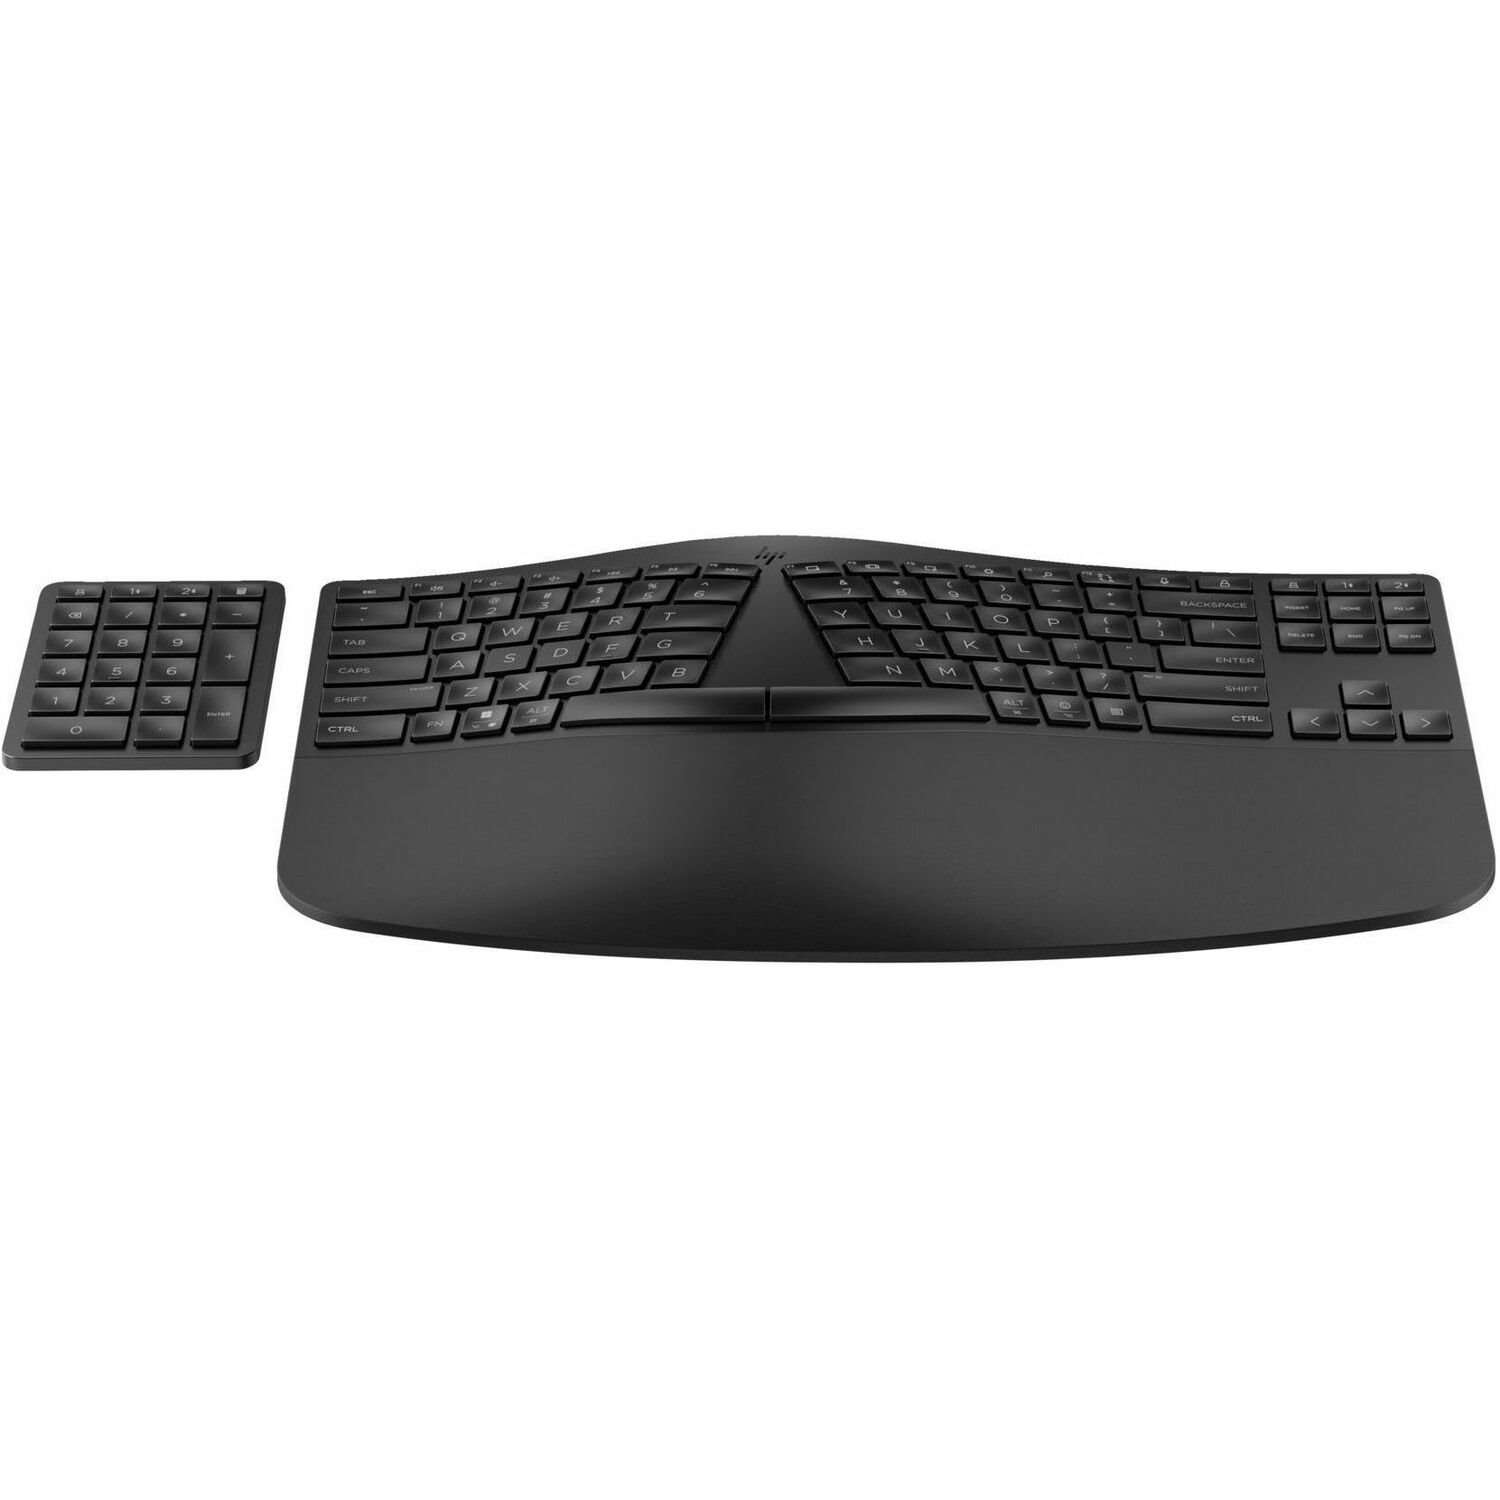 HP 965 Ergonomic Wireless Keyboard (7E756AA)